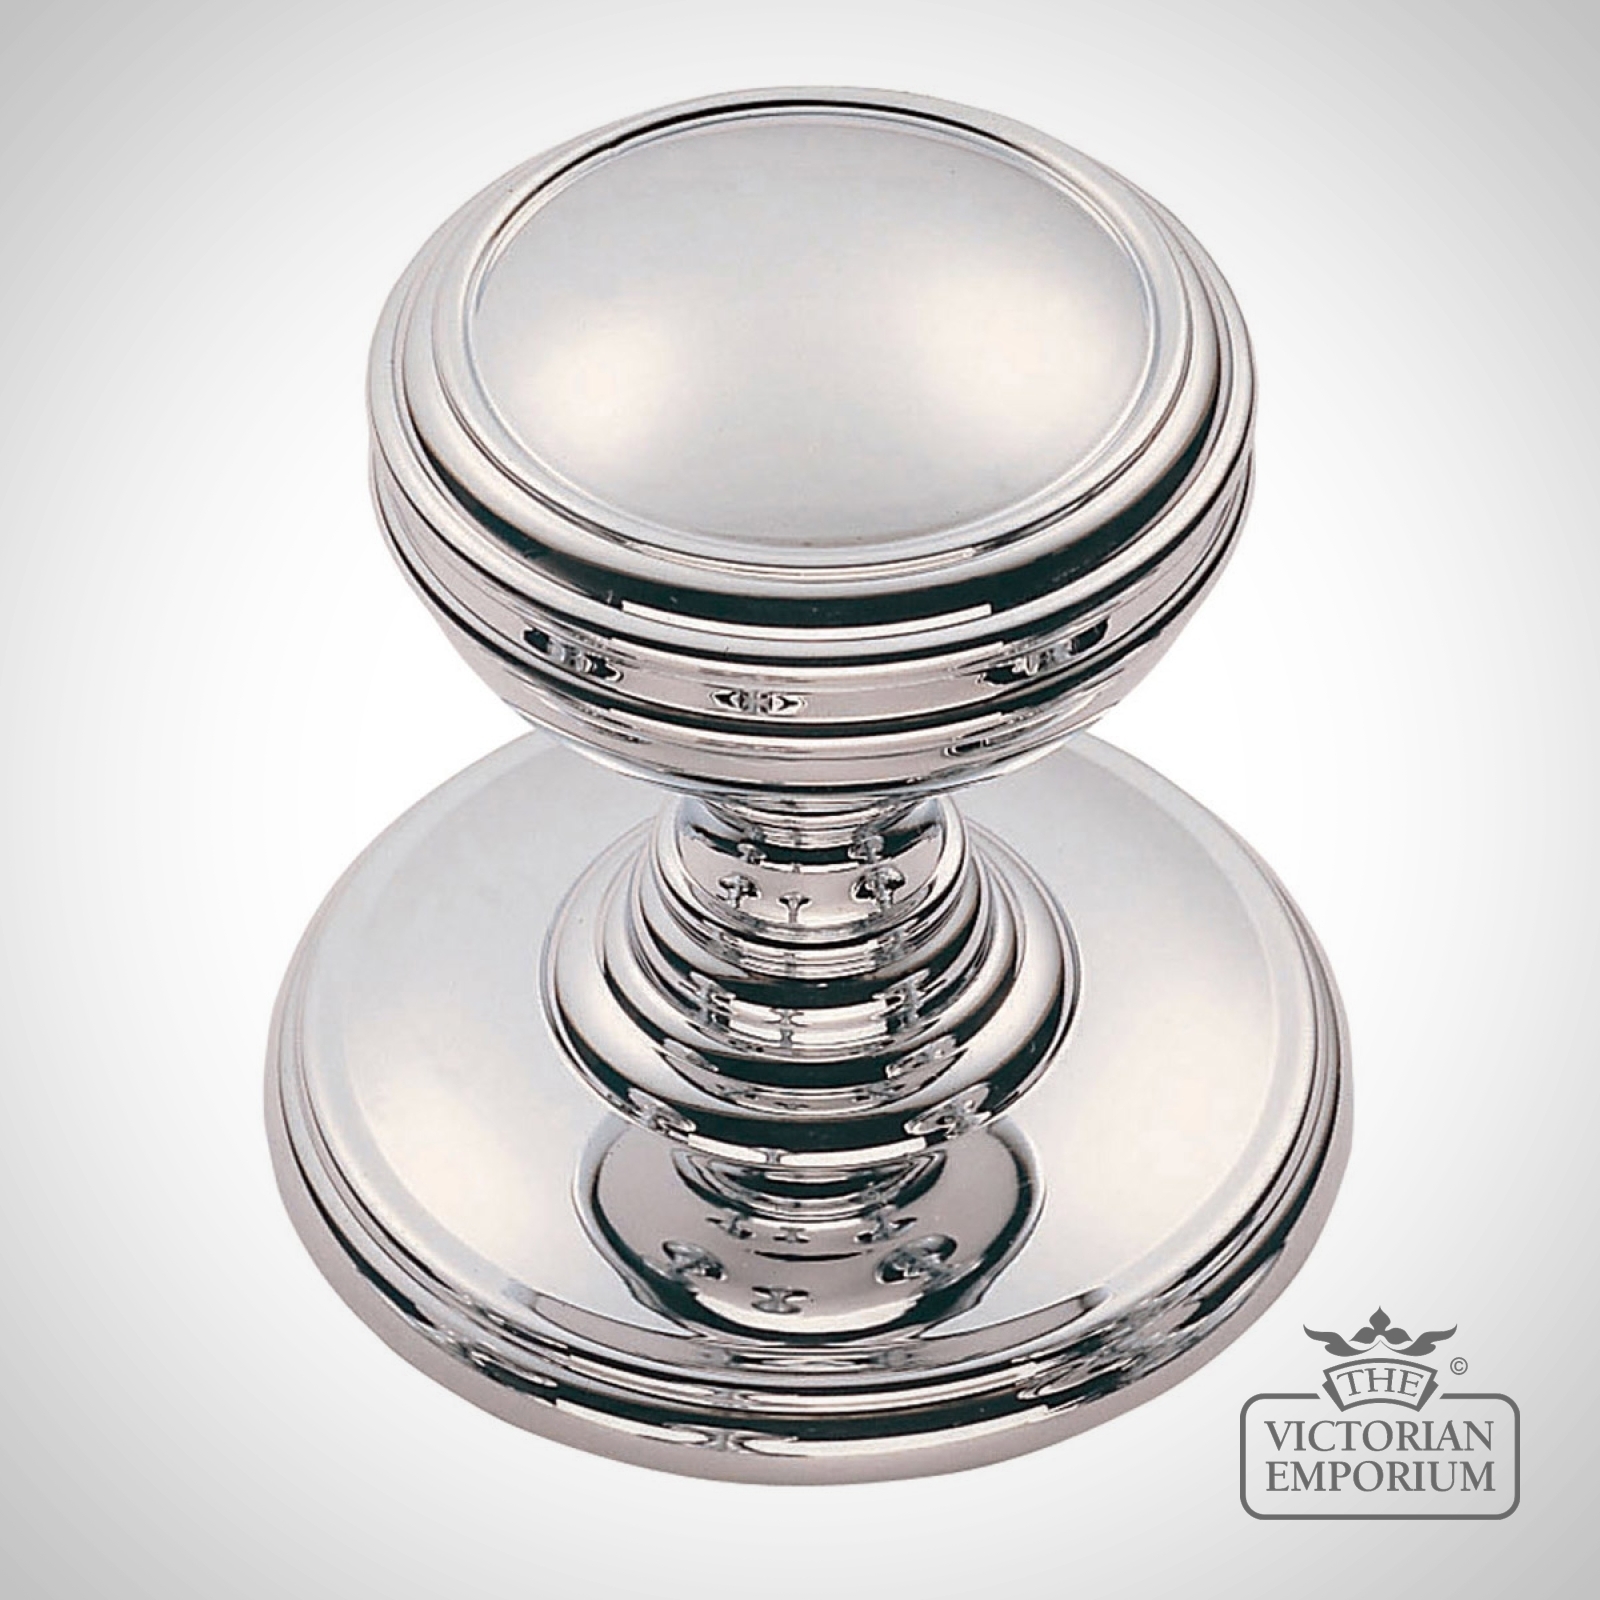 Metal circular cupboard knob - 38mm